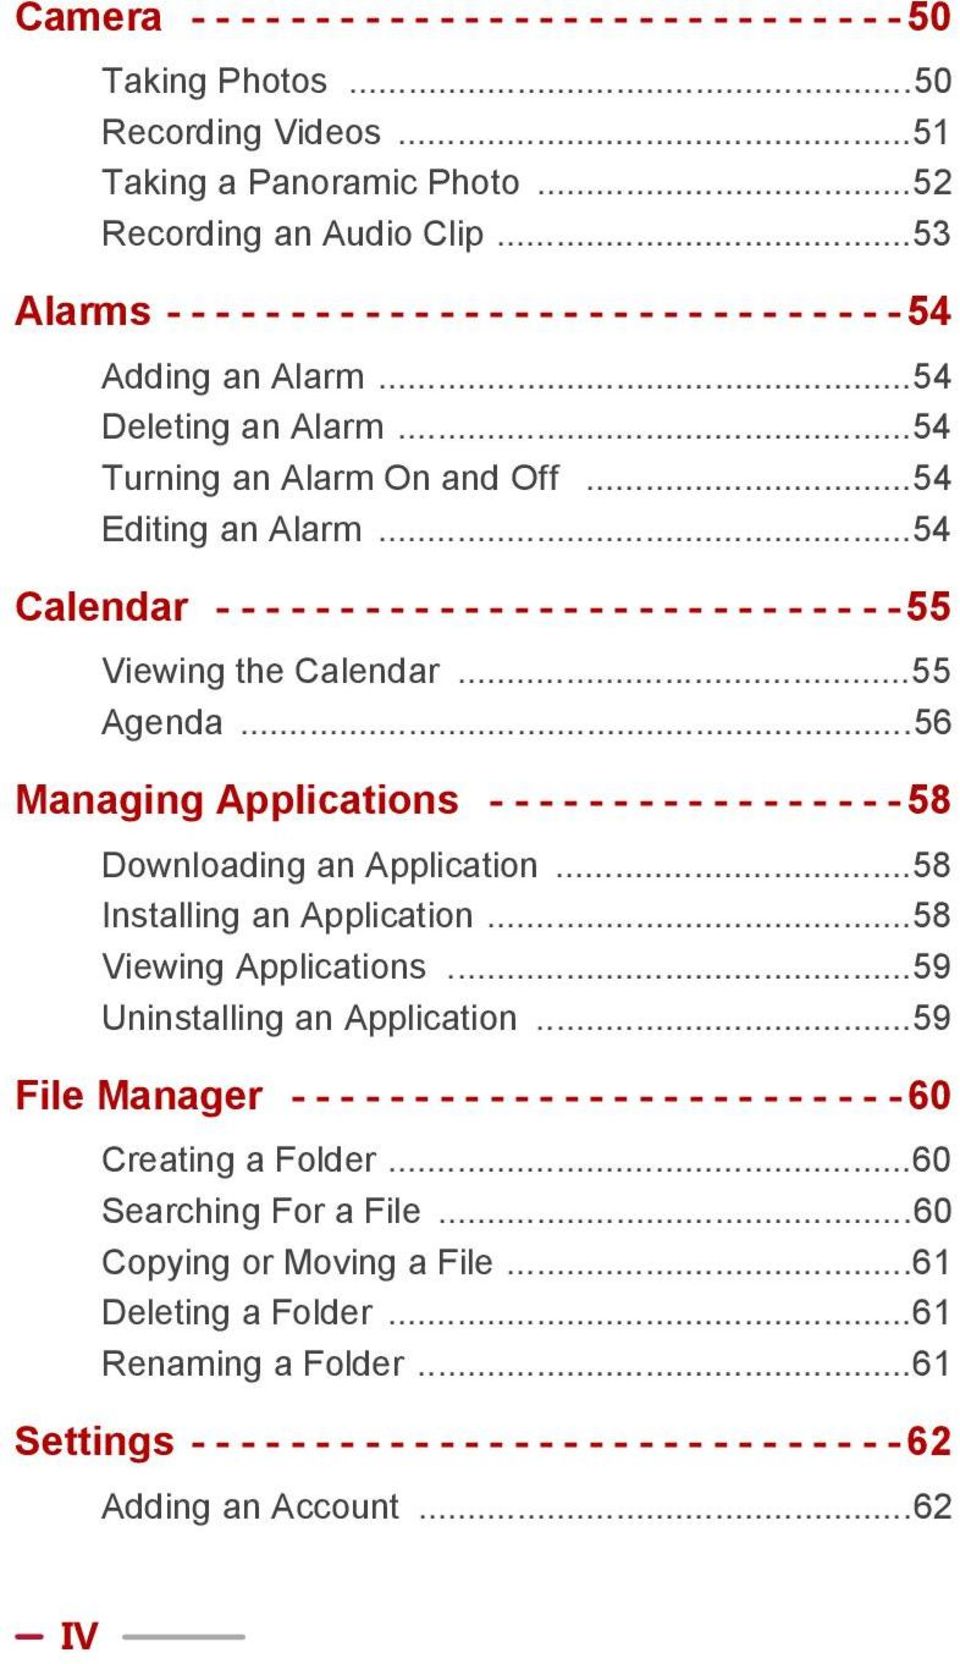 ..54 Calendar - - - - - - - - - - - - - - - - - - - - - - - - - - - - 55 Viewing the Calendar...55 Agenda...56 Managing Applications - - - - - - - - - - - - - - - - - 58 Downloading an Application.